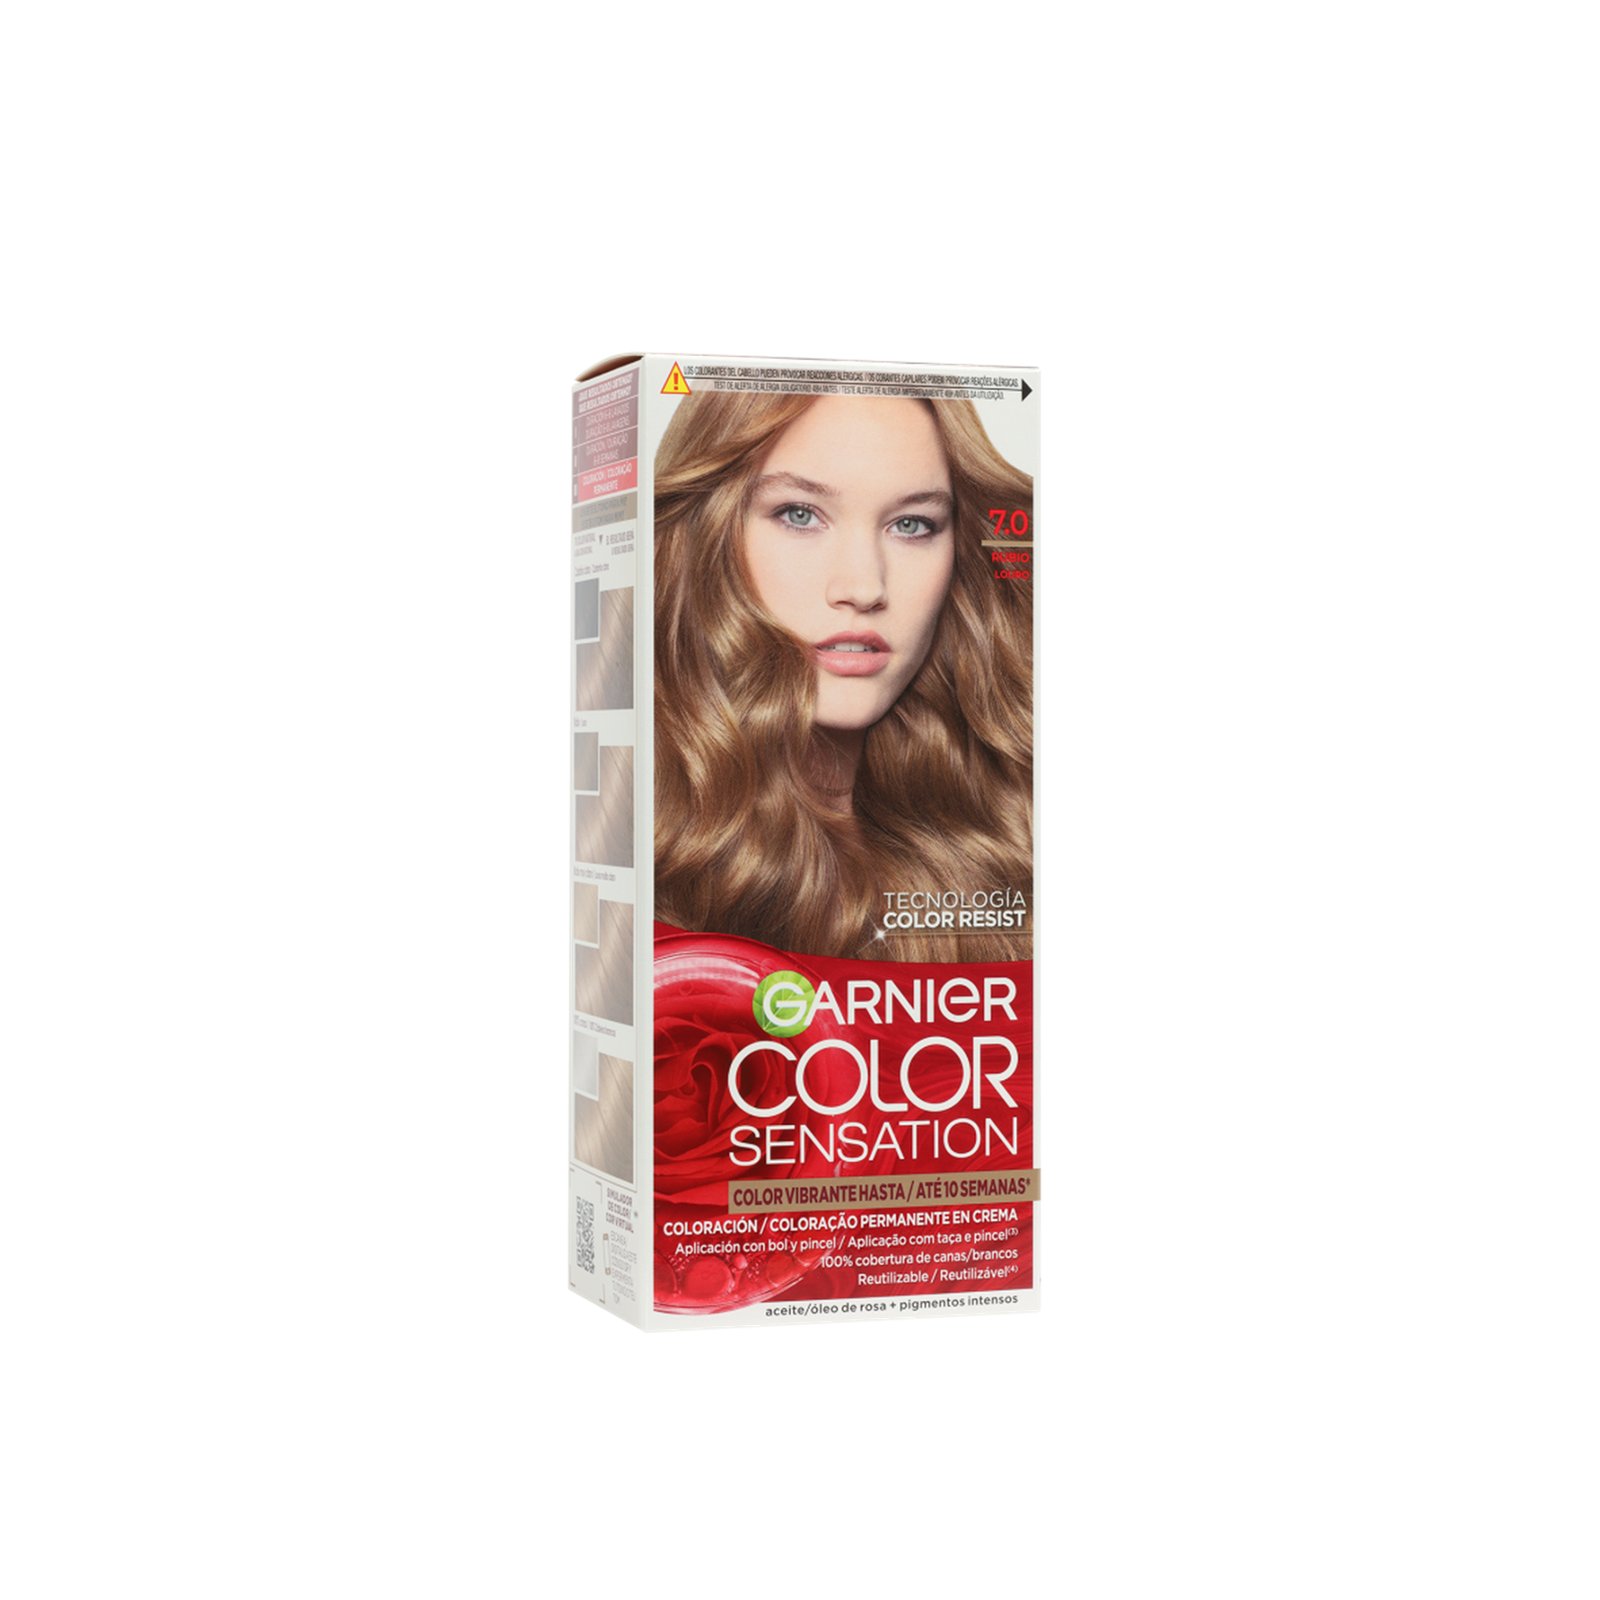 Garnier Color Sensation Permanent Hair Dye 7.0 Blond